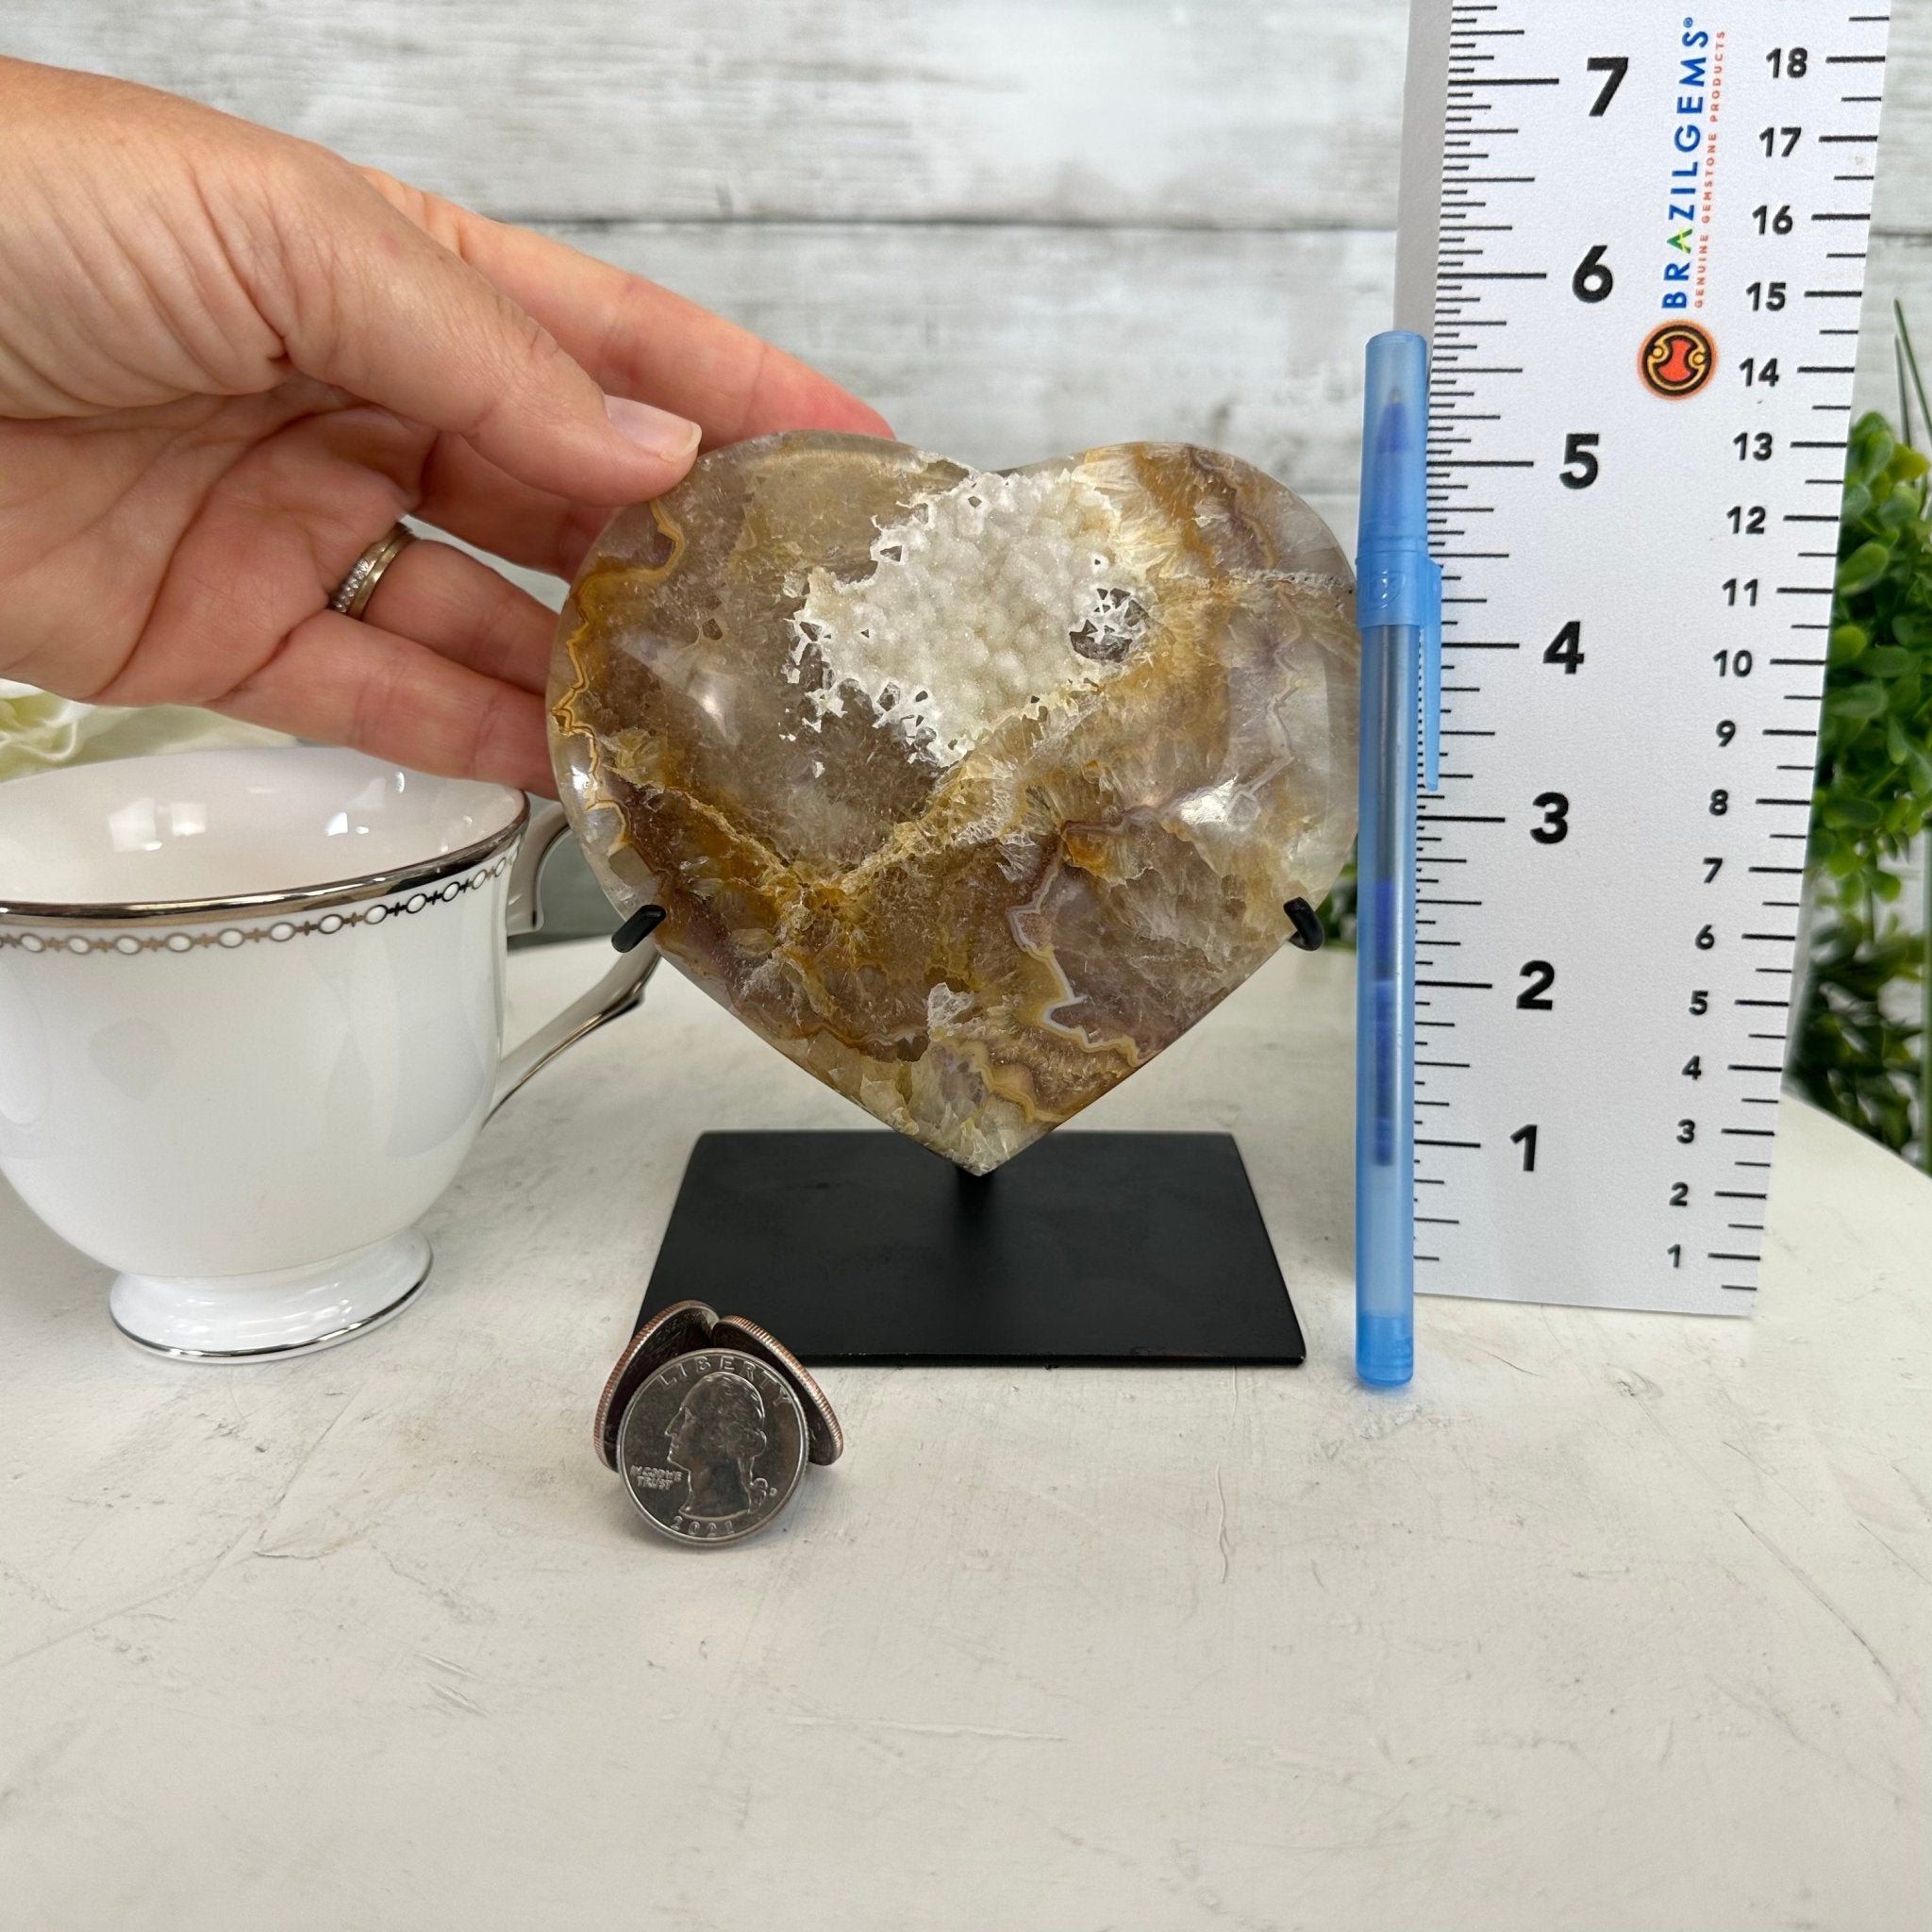 Polished Agate Heart Geode on a Metal Stand, 2.2 lbs & 5.25" Tall, Model #5468-0064 by Brazil Gems - Brazil GemsBrazil GemsPolished Agate Heart Geode on a Metal Stand, 2.2 lbs & 5.25" Tall, Model #5468-0064 by Brazil GemsHearts5468-0064